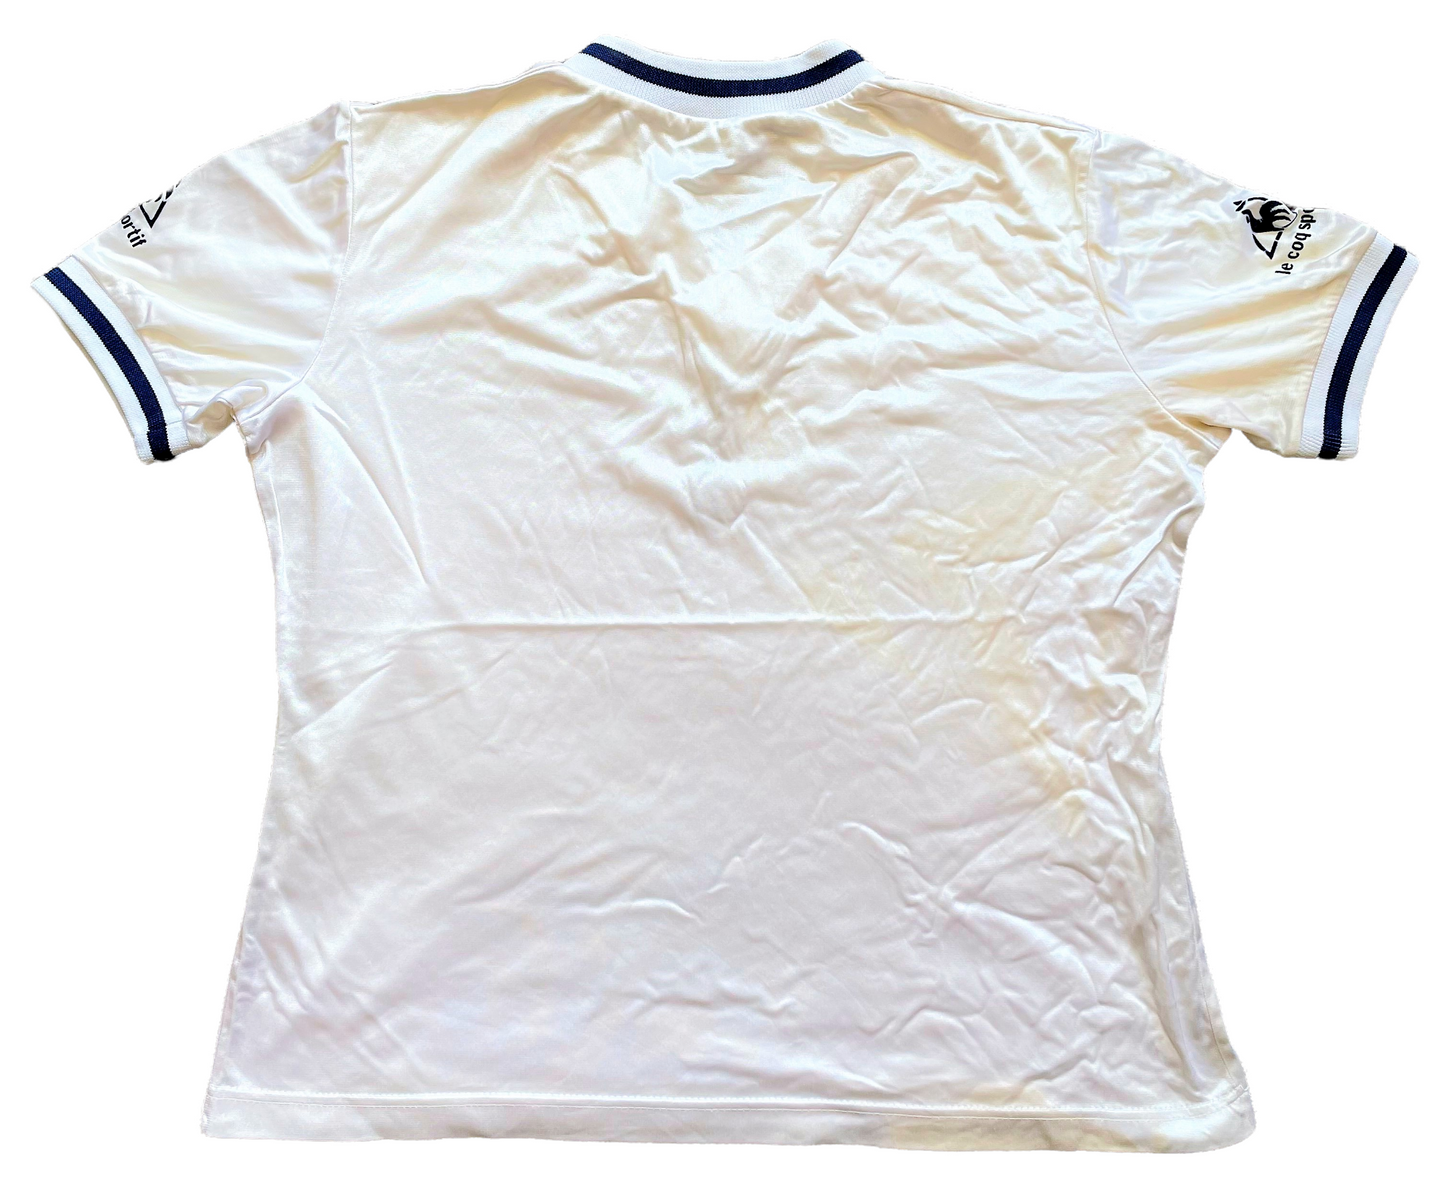 Tottenham 1980 Home Shirt (very good) Adults XXS/Large Boys. Height 17 inch